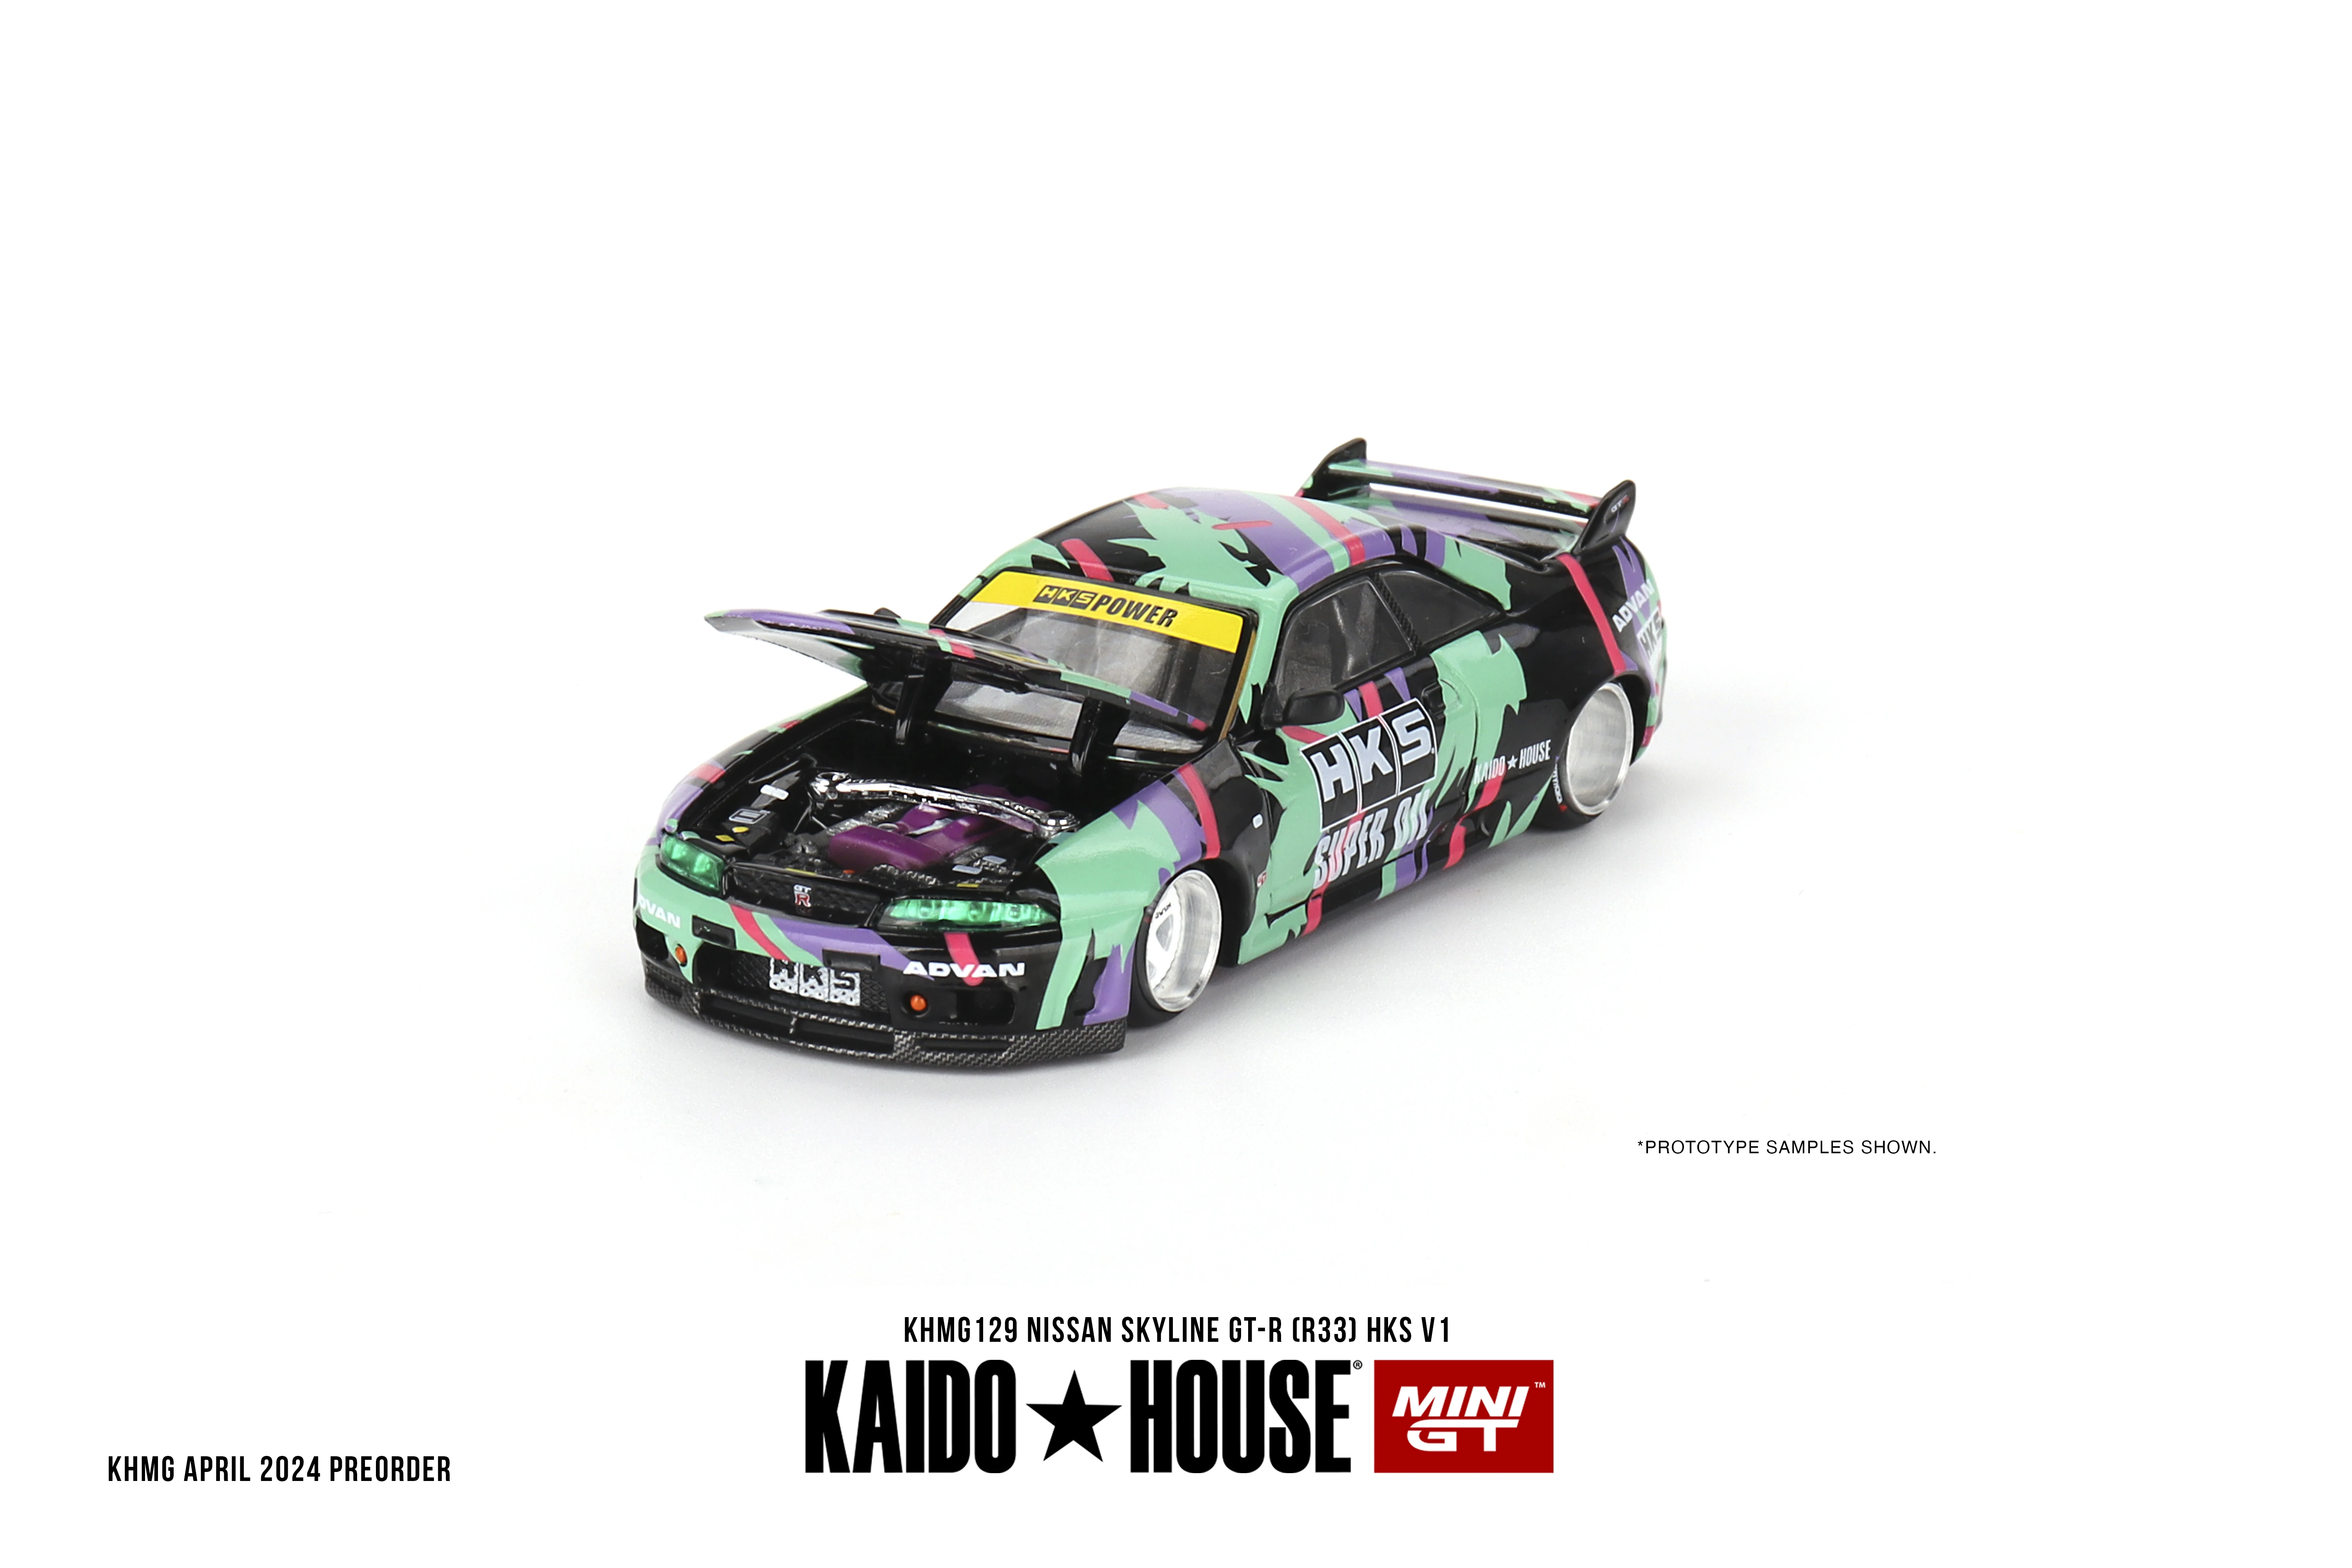 Kaido haus minigt skyline gtr r33 hks v1 khmg129 modell auto aus druckguss